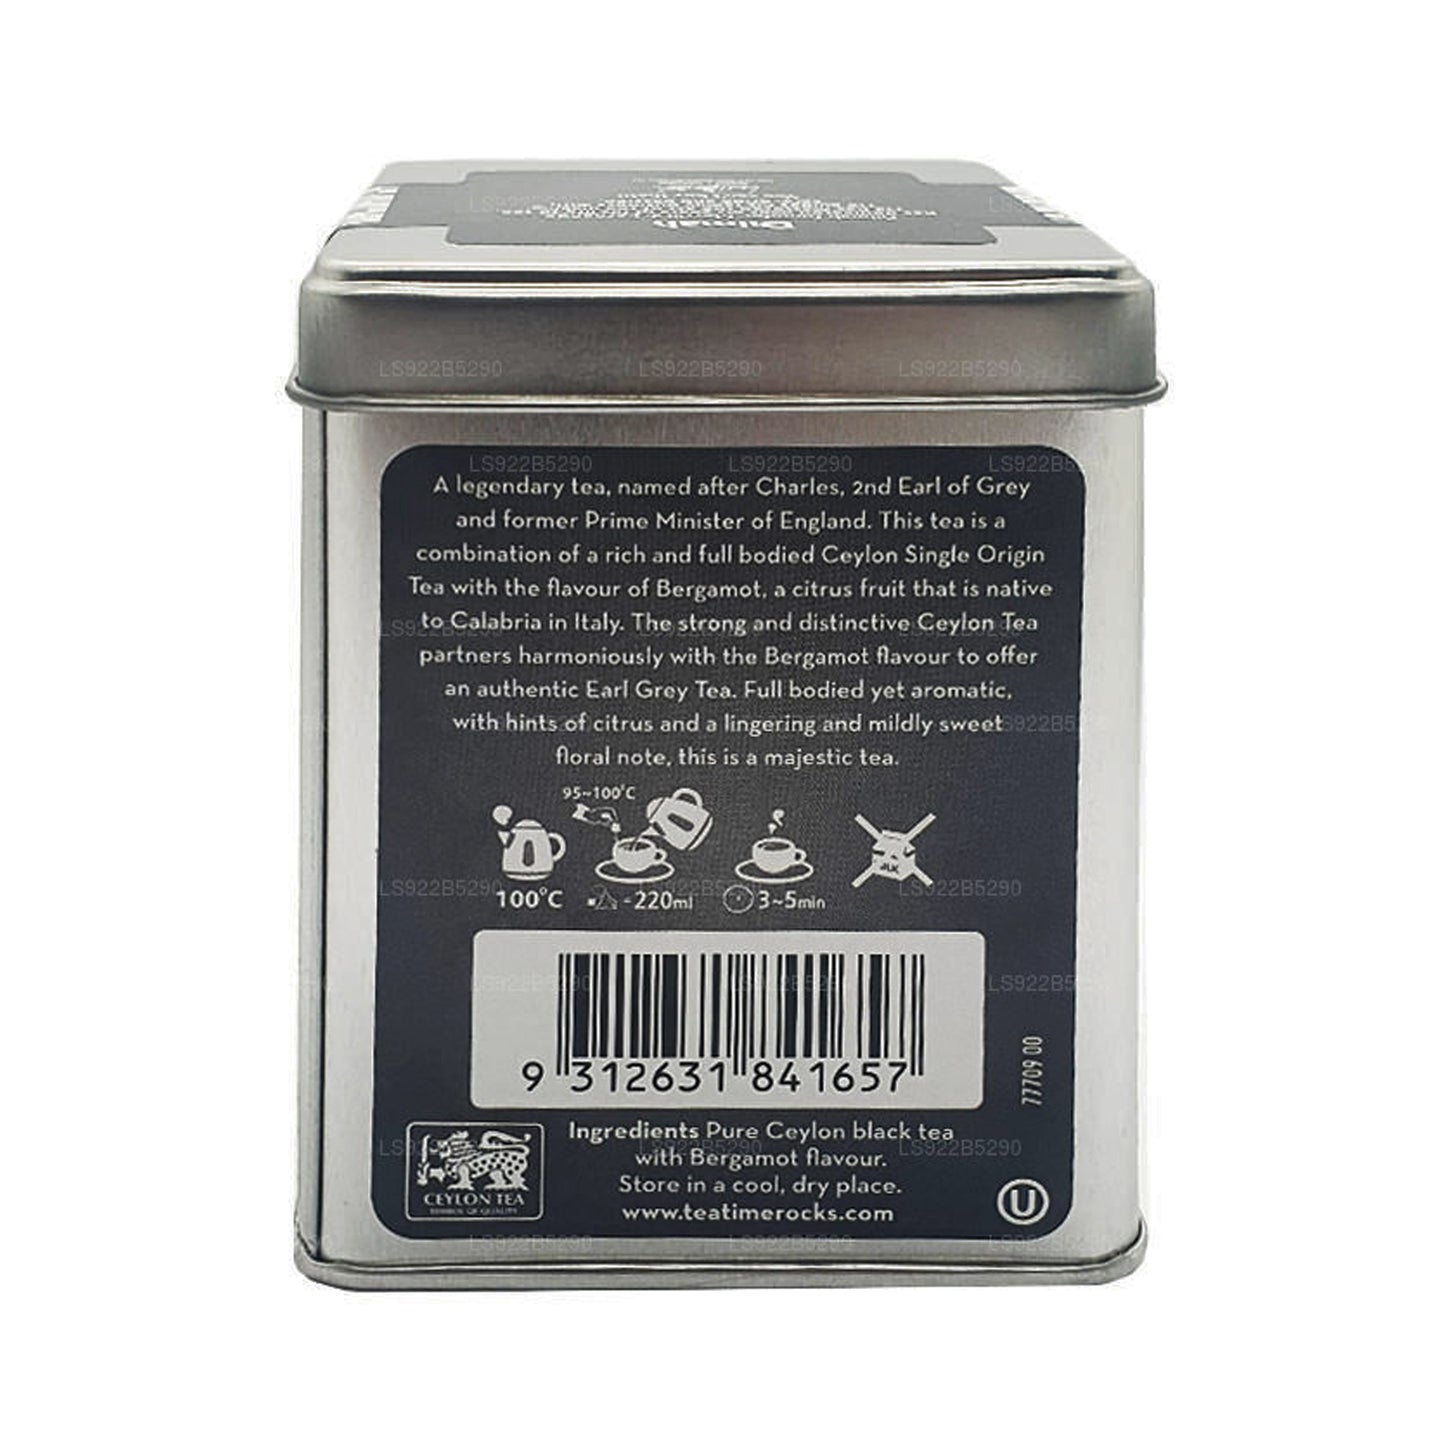 Dilmah T-Serie The Original Earl Grey Tea (40 g) 20 Teebeutel